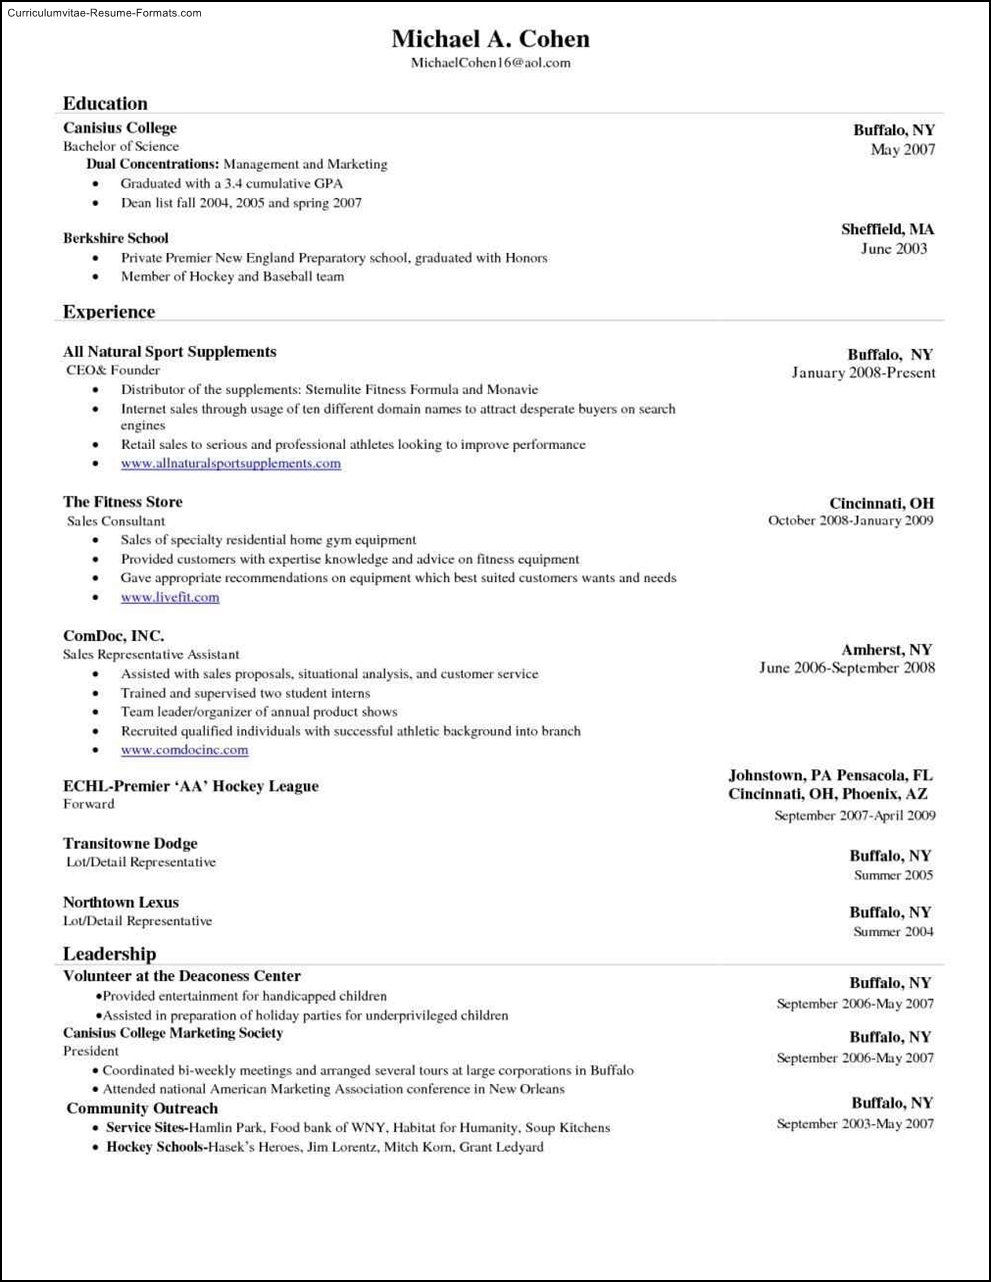 Microsoft office word resume template - primeloxa